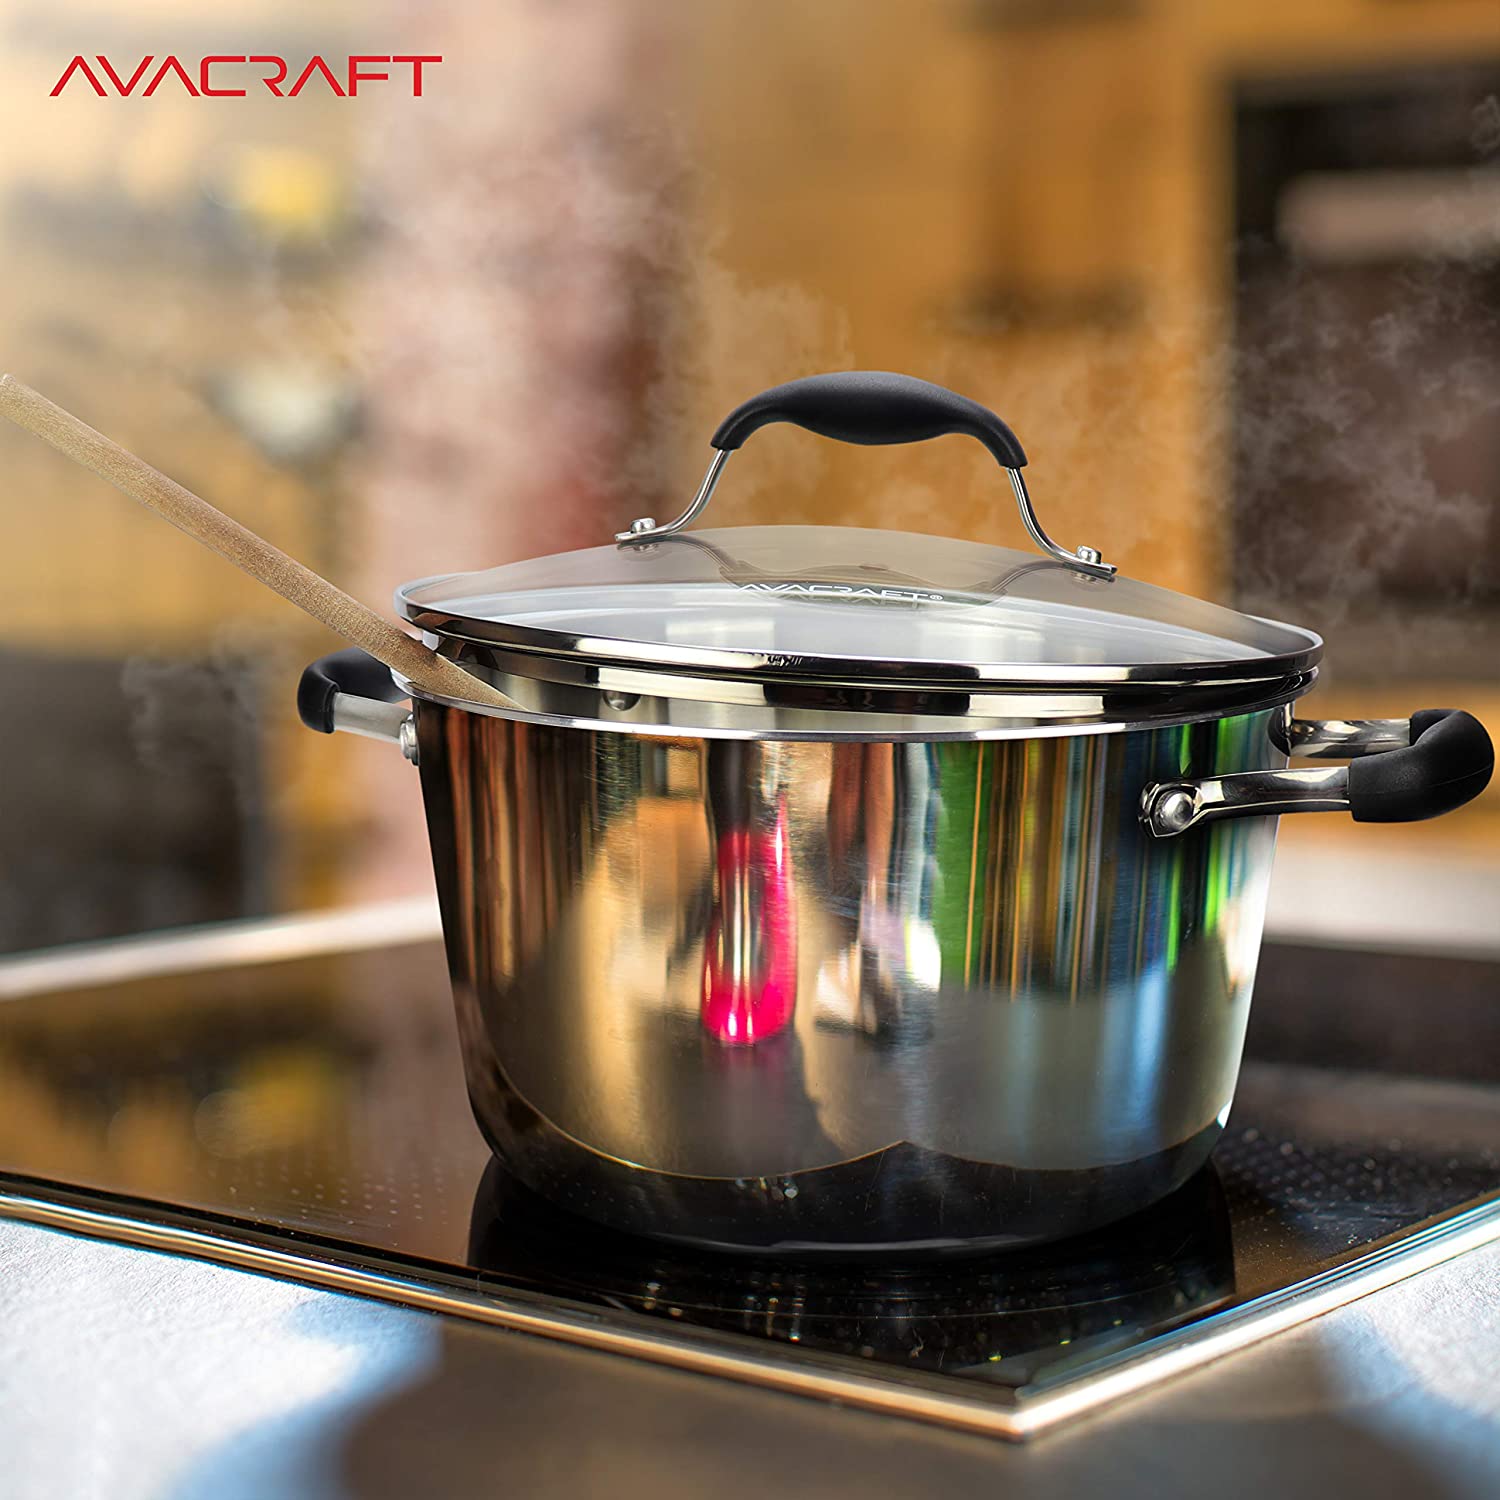 AVACRAFT 18/10 Tri-Ply Stainless Steel Multipurpose Pot, Dutch Oven Casserole Stock Pot with Lid, Ergonomic Heat Proof Handles